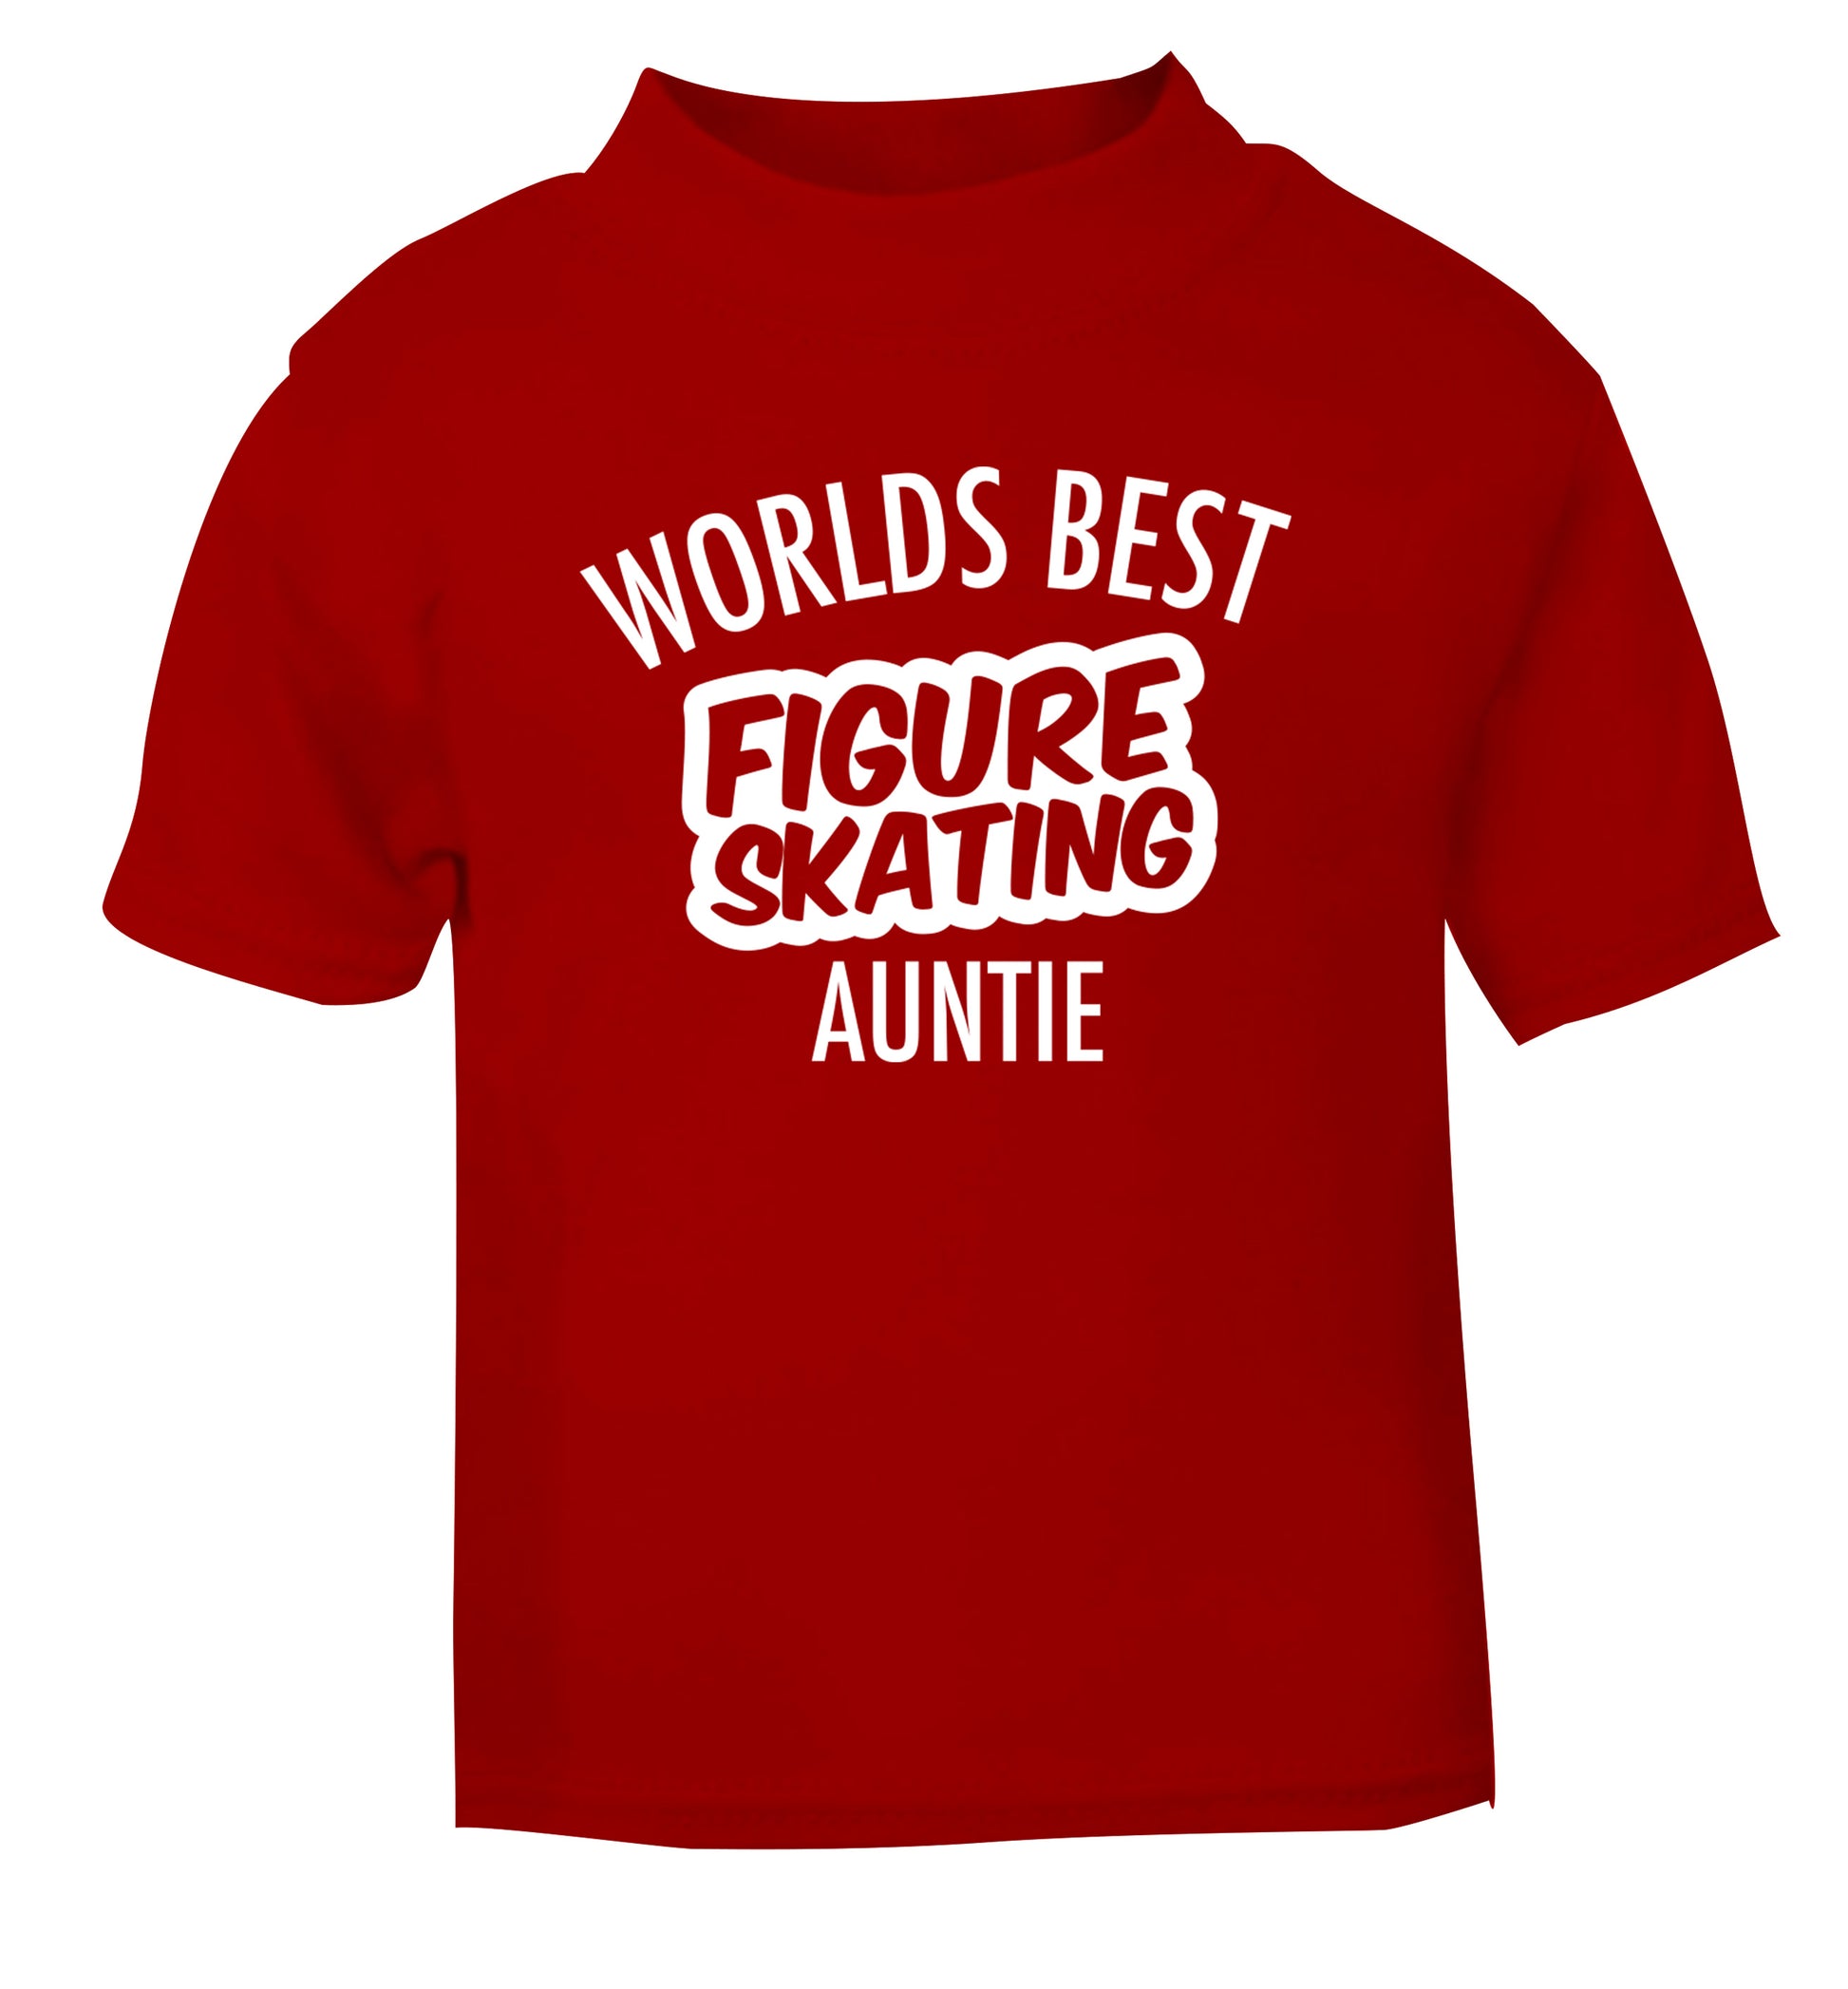 Worlds best figure skating auntie red Baby Toddler Tshirt 2 Years